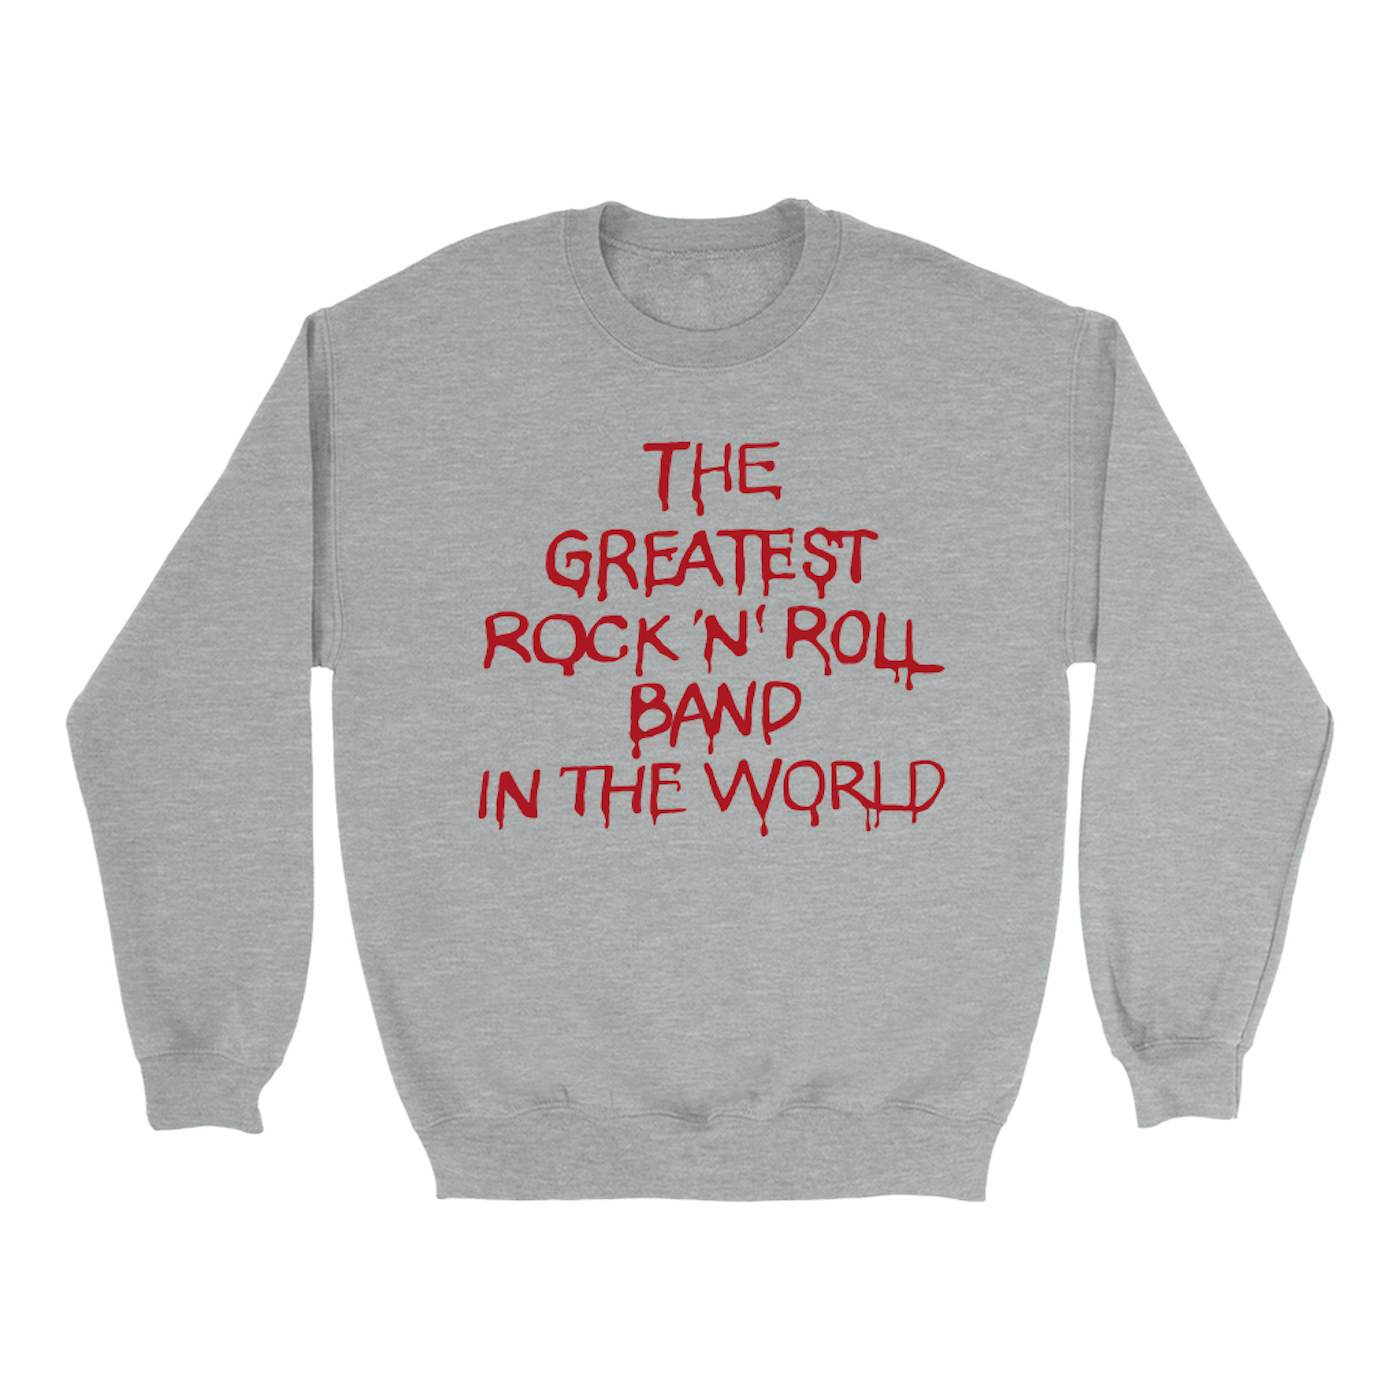 The Who Sweatshirt | The Greatest Band Worn By Keith Moon The Who Sweatshirt